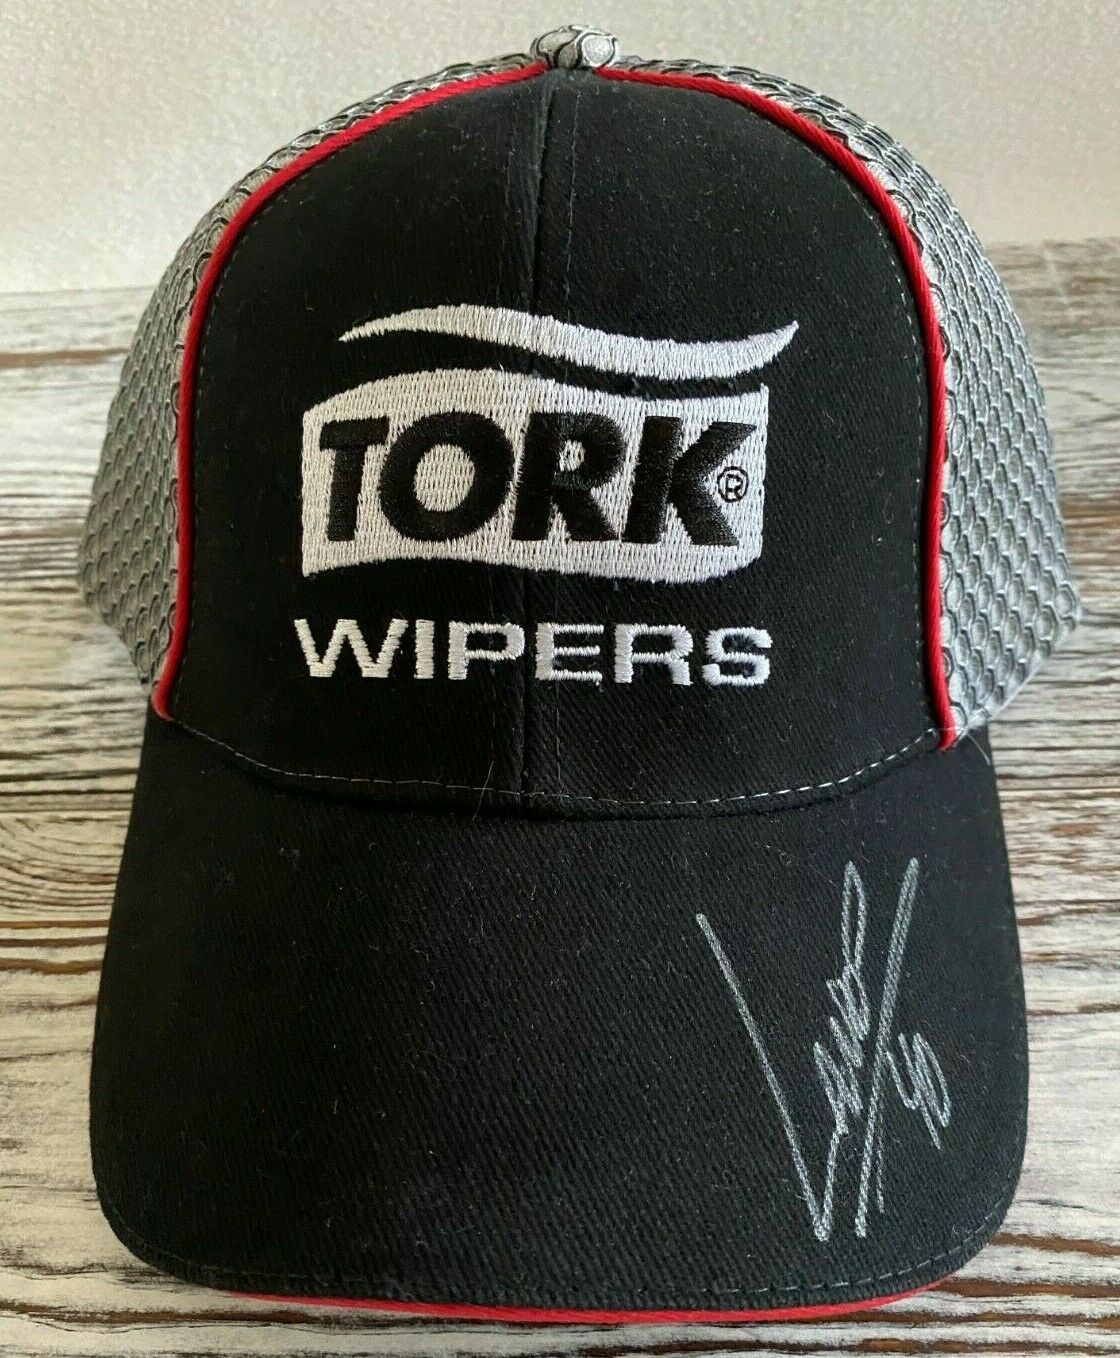 Landon Cassill Tork Wipers Signed Autographed Hat Cap Nascar